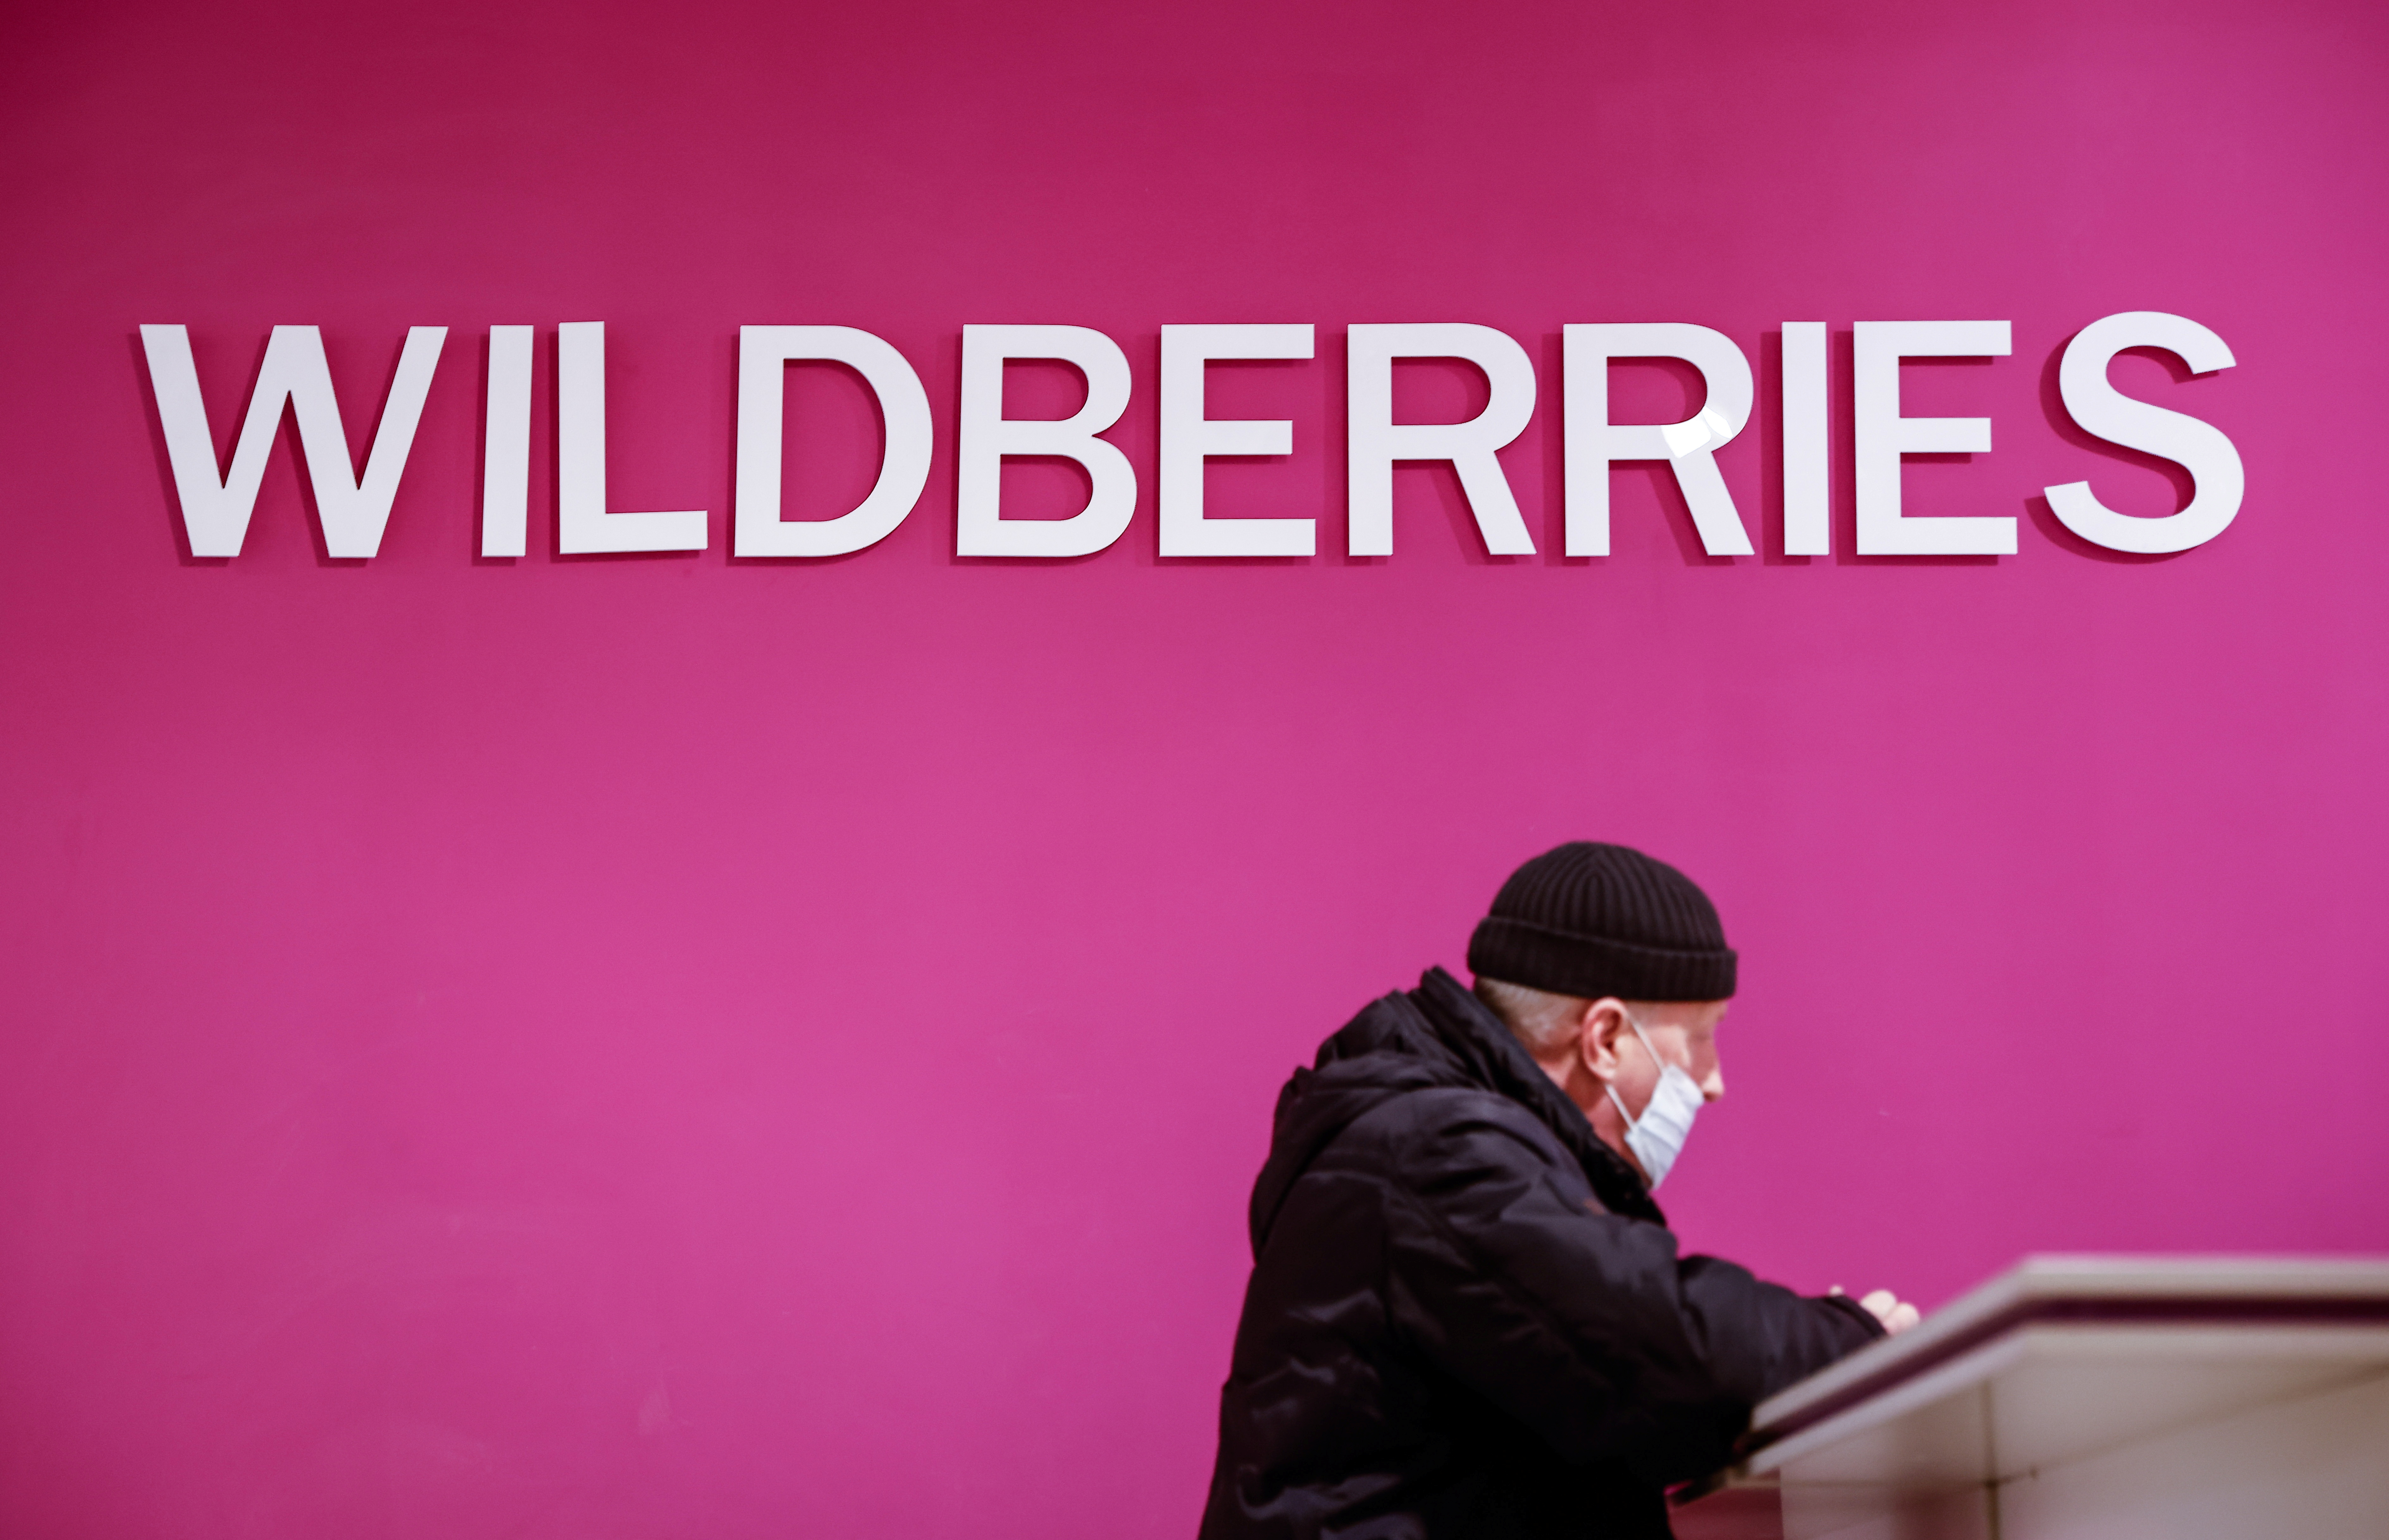 Working at Wildberries